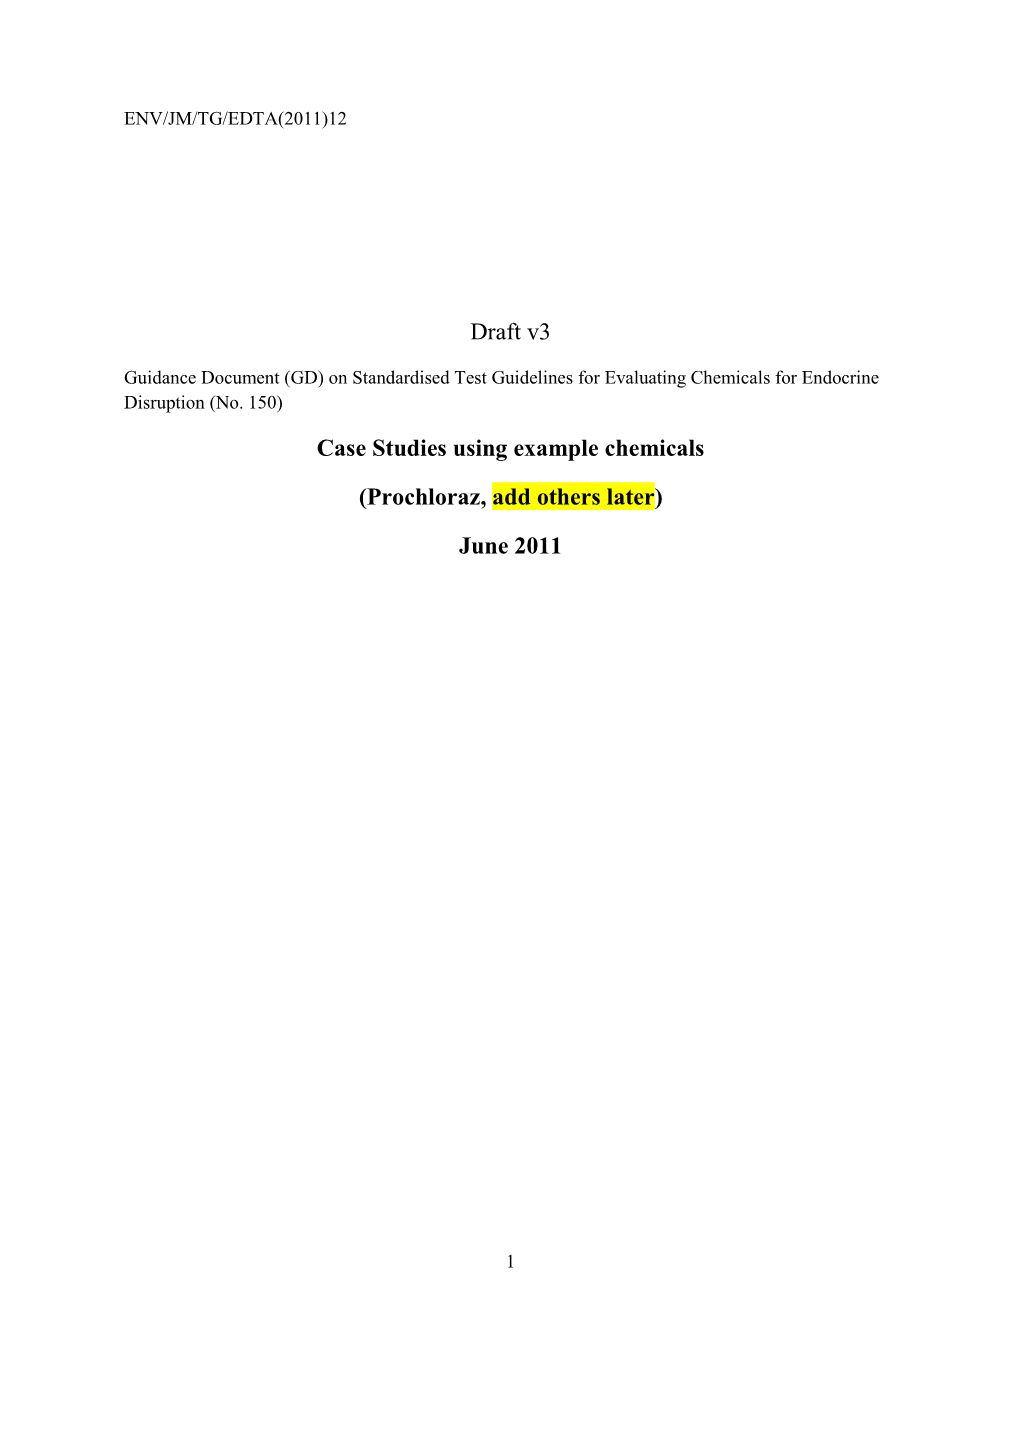 Draft V3 Case Studies Using Example Chemicals (Prochloraz, Add